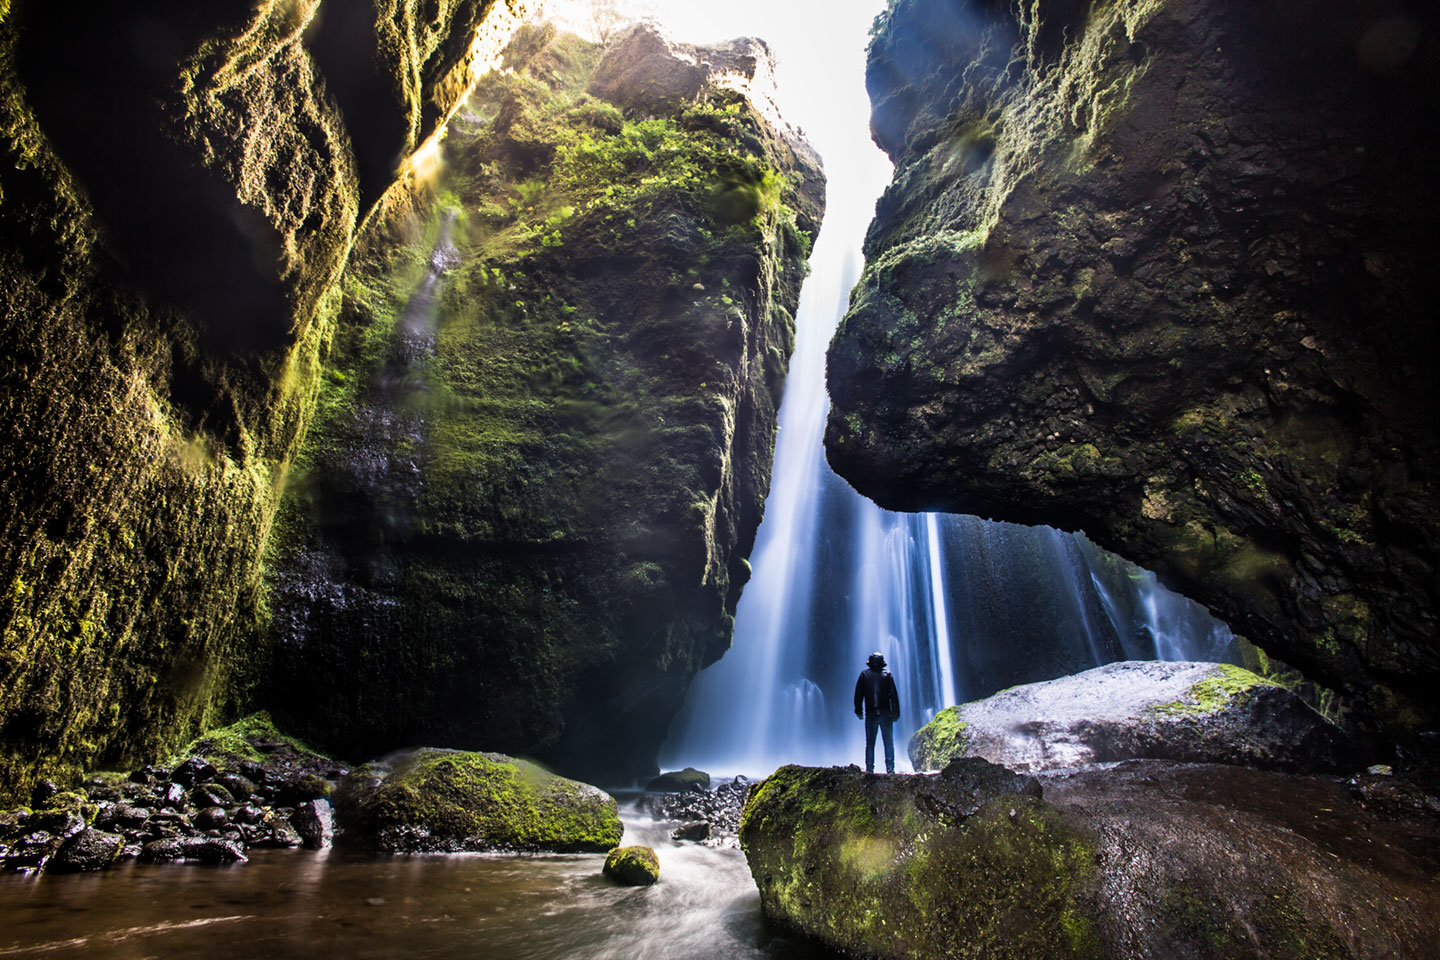 Gljufrabui hidden waterfall in Iceland